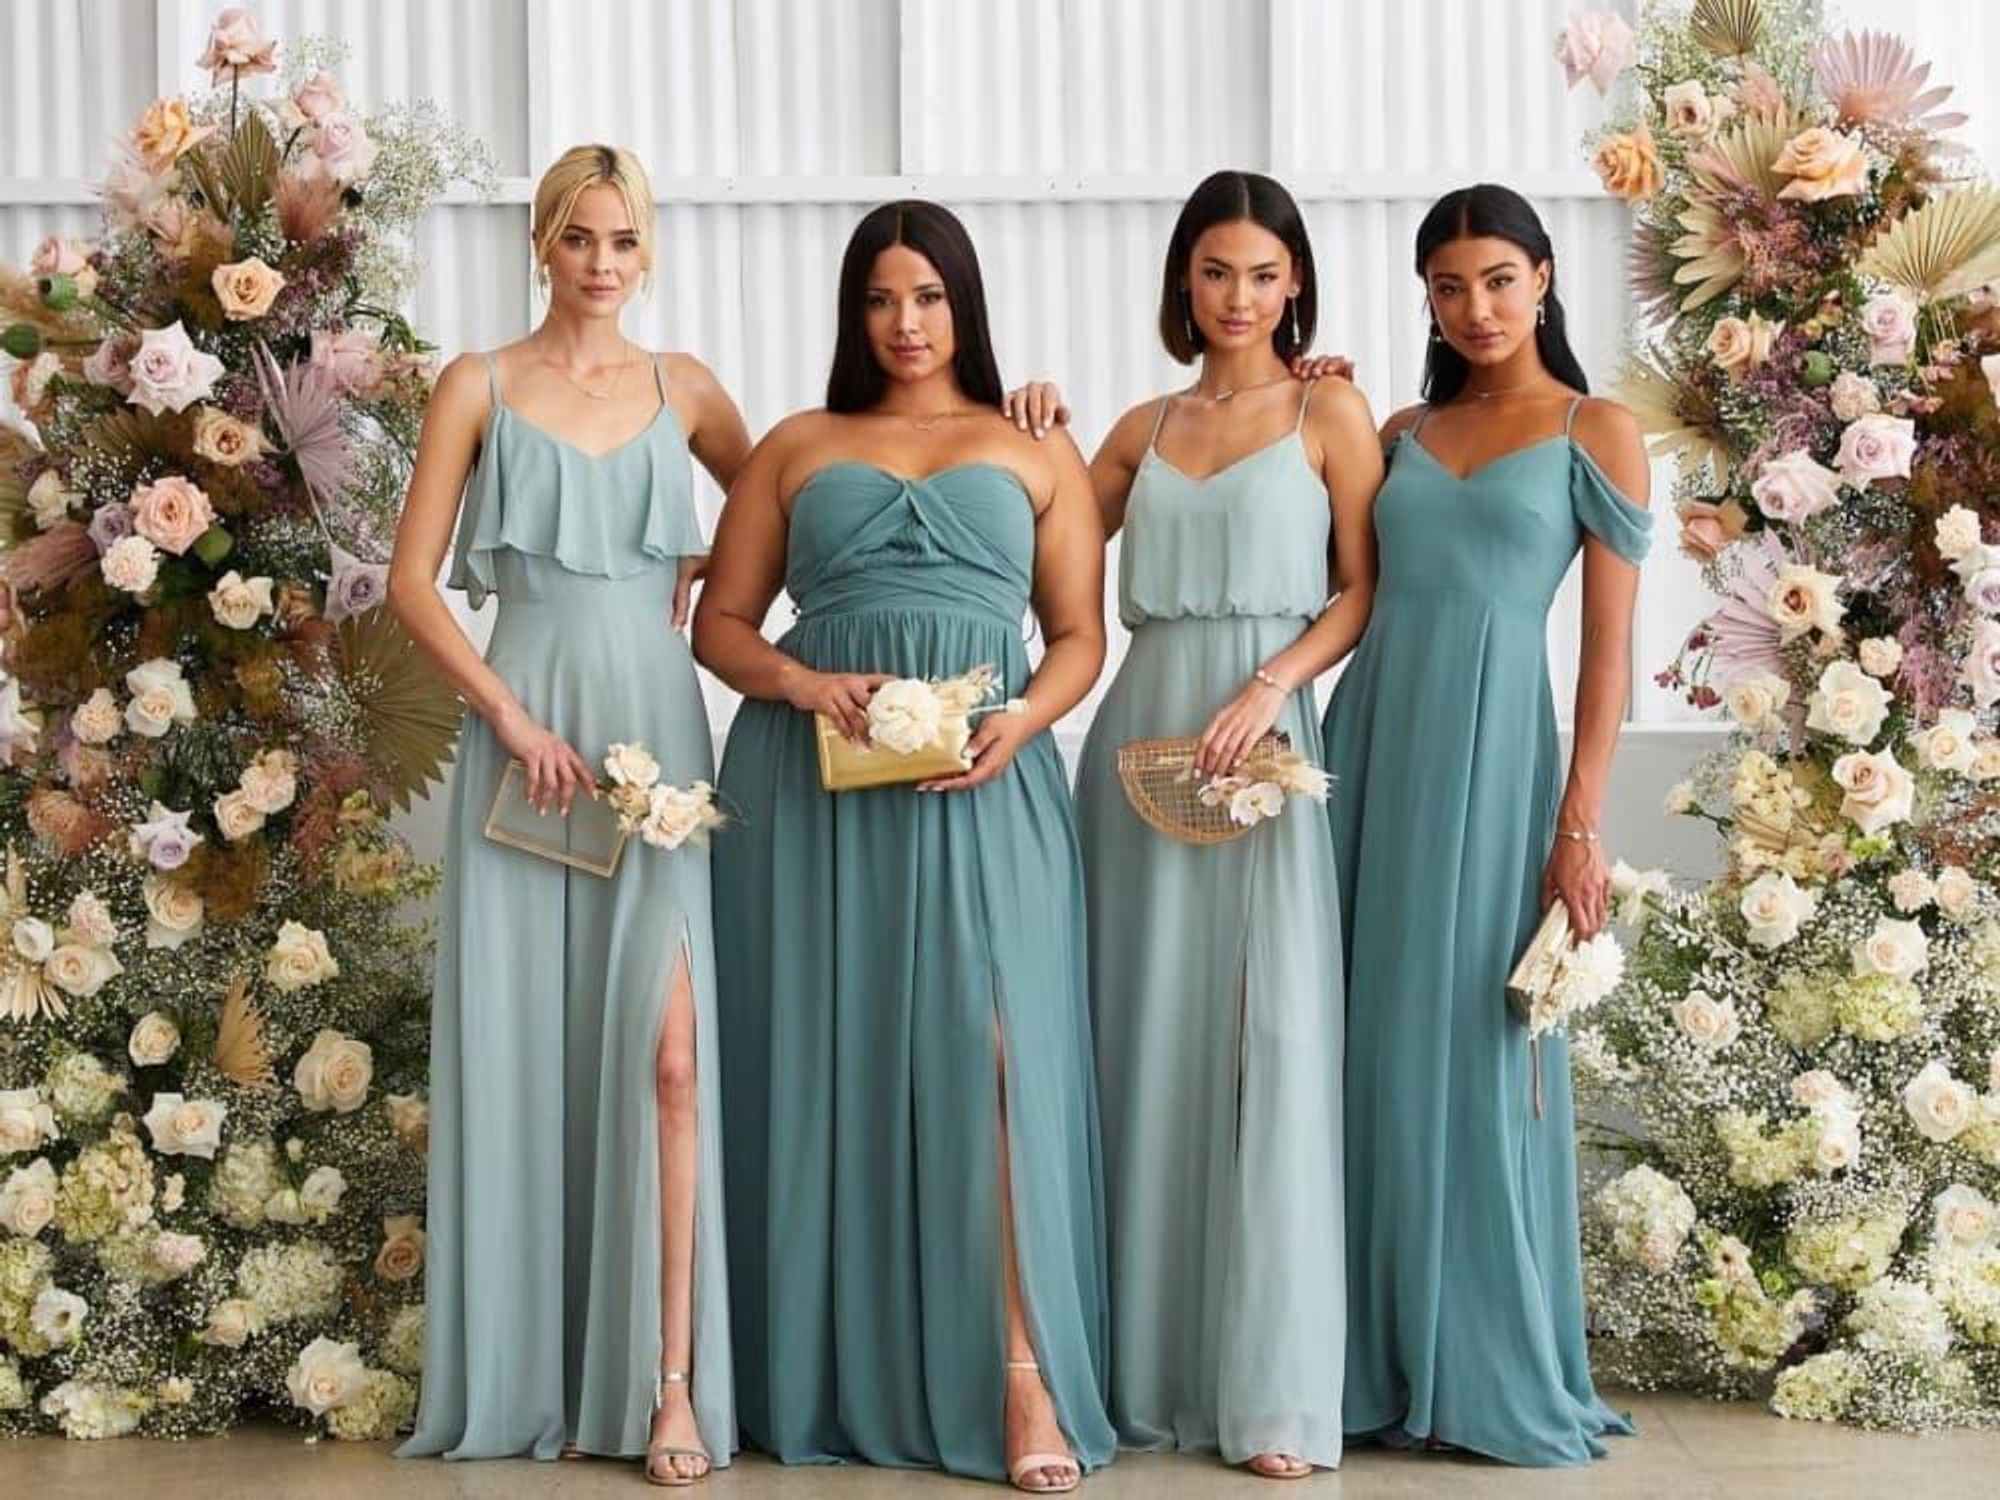 Cult-favorite bridal brand brings $99 bridesmaid dresses to one